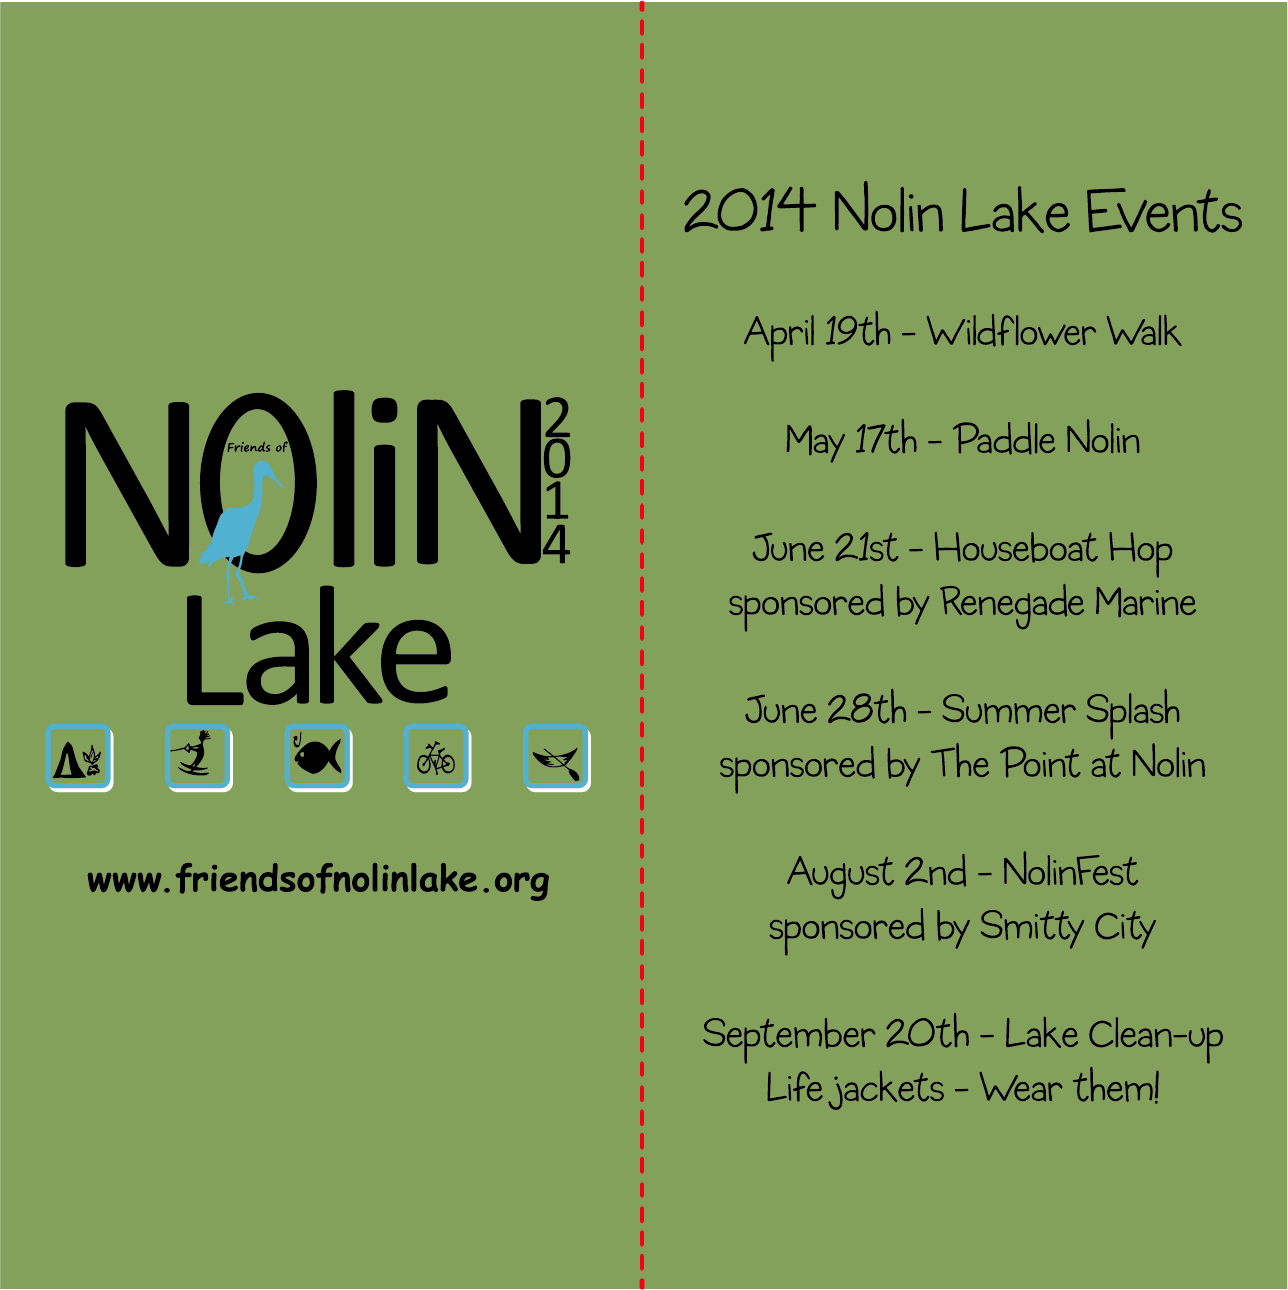 Friends of Nolin Lake shirt design - zoomed